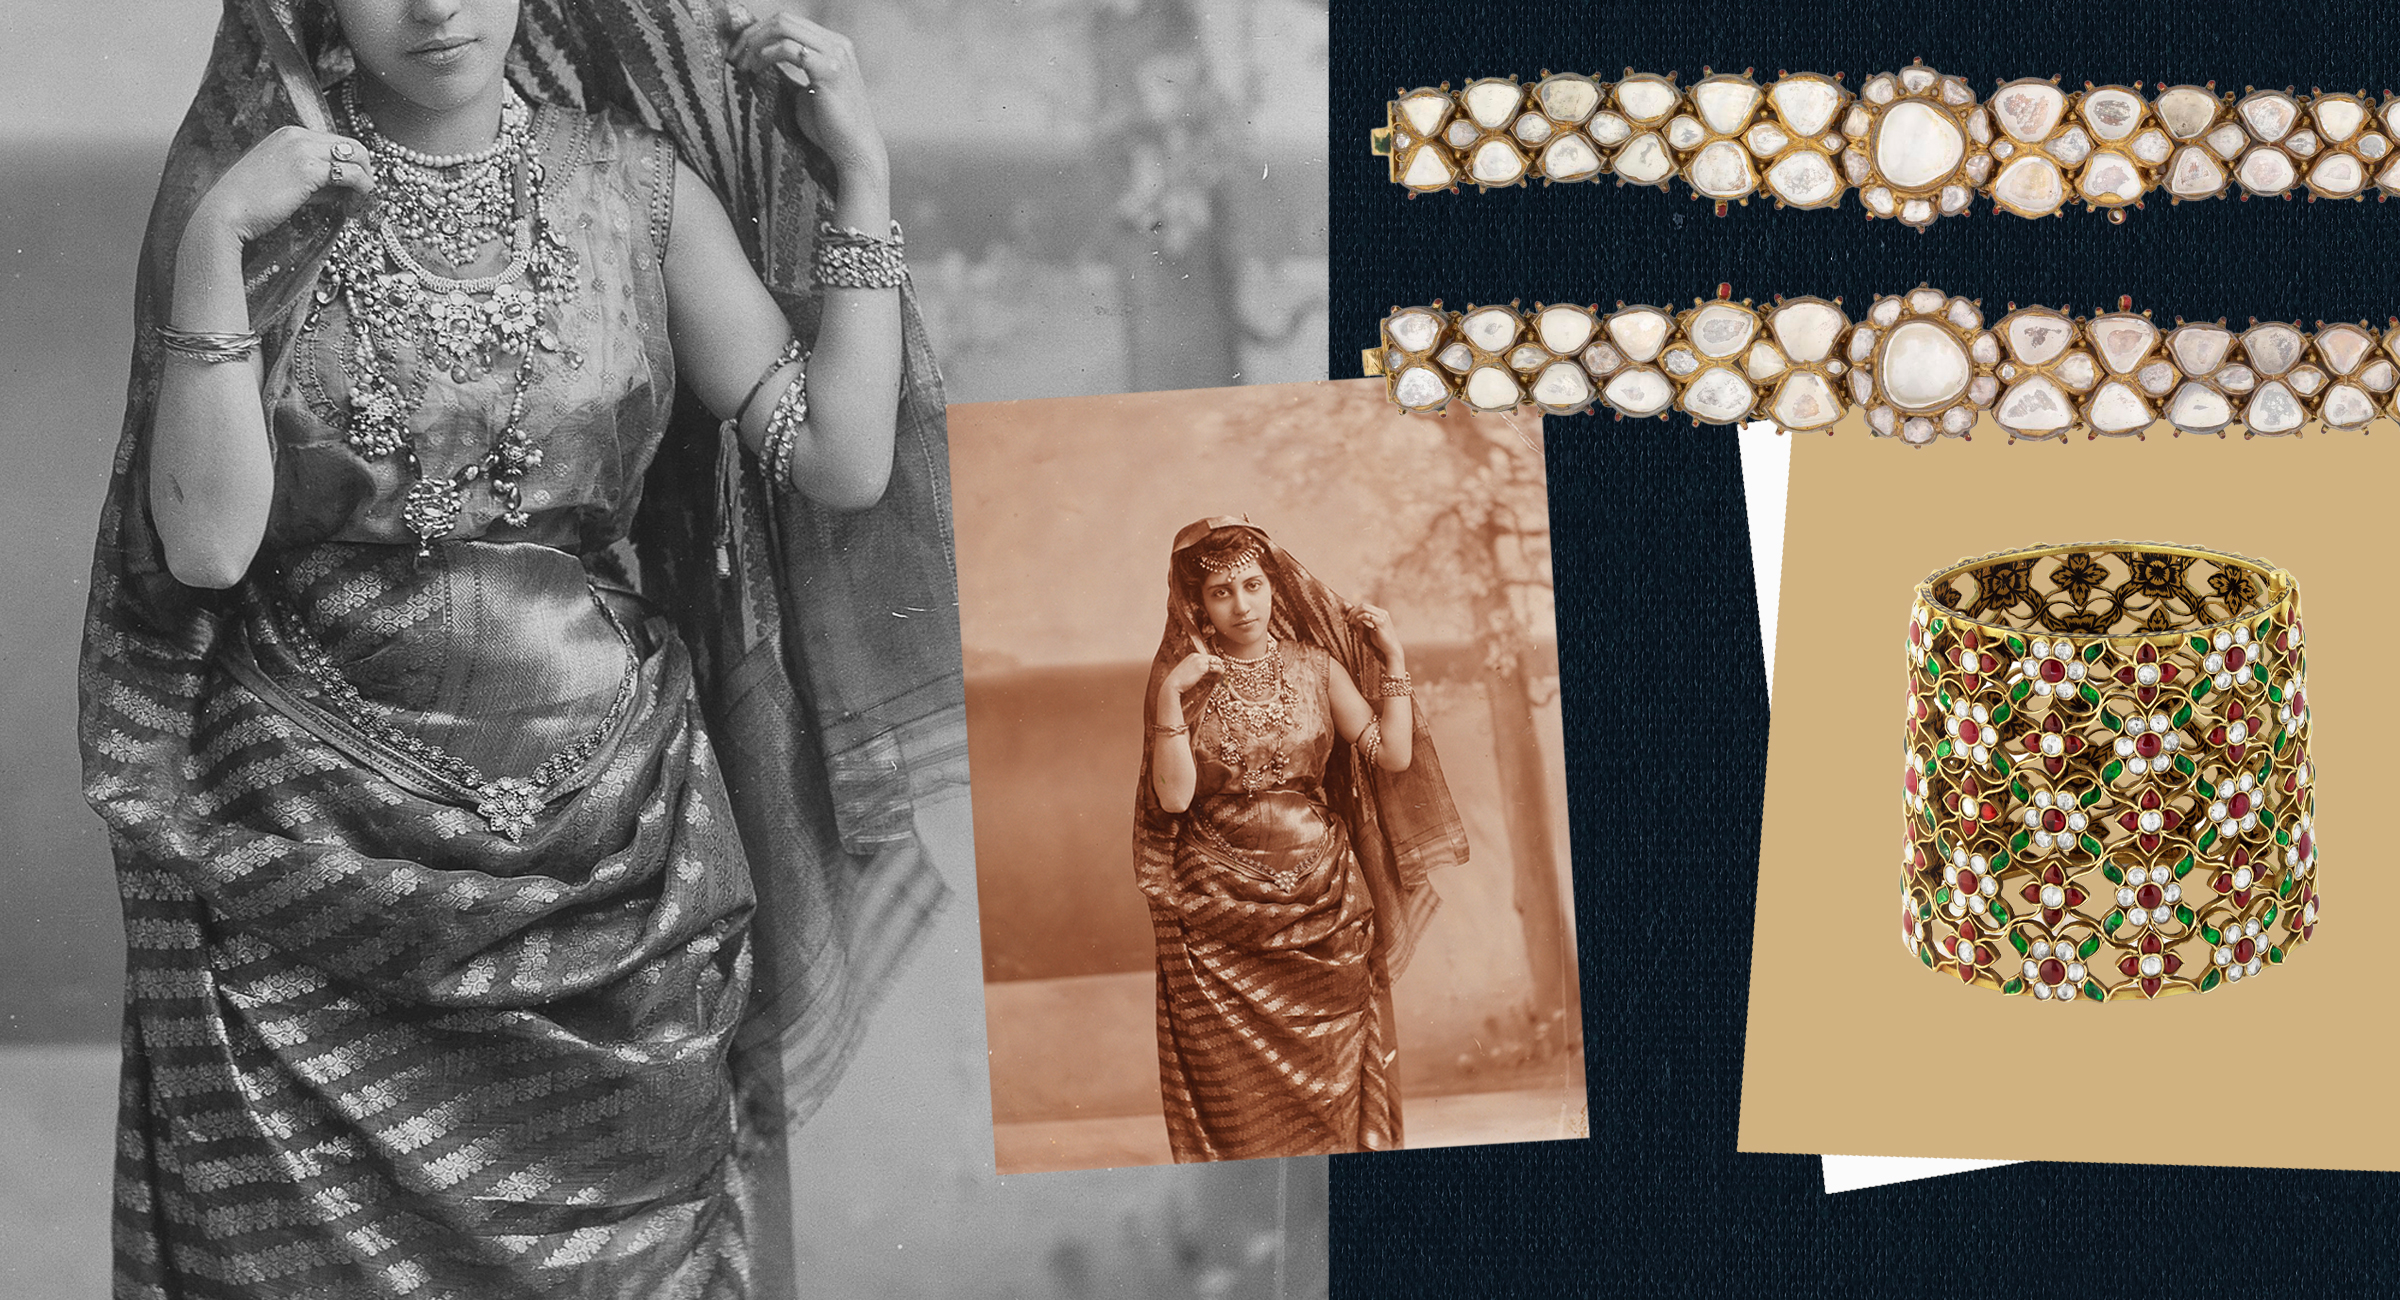 Diamond bracelets, arm jewellery cuts through different strata of society